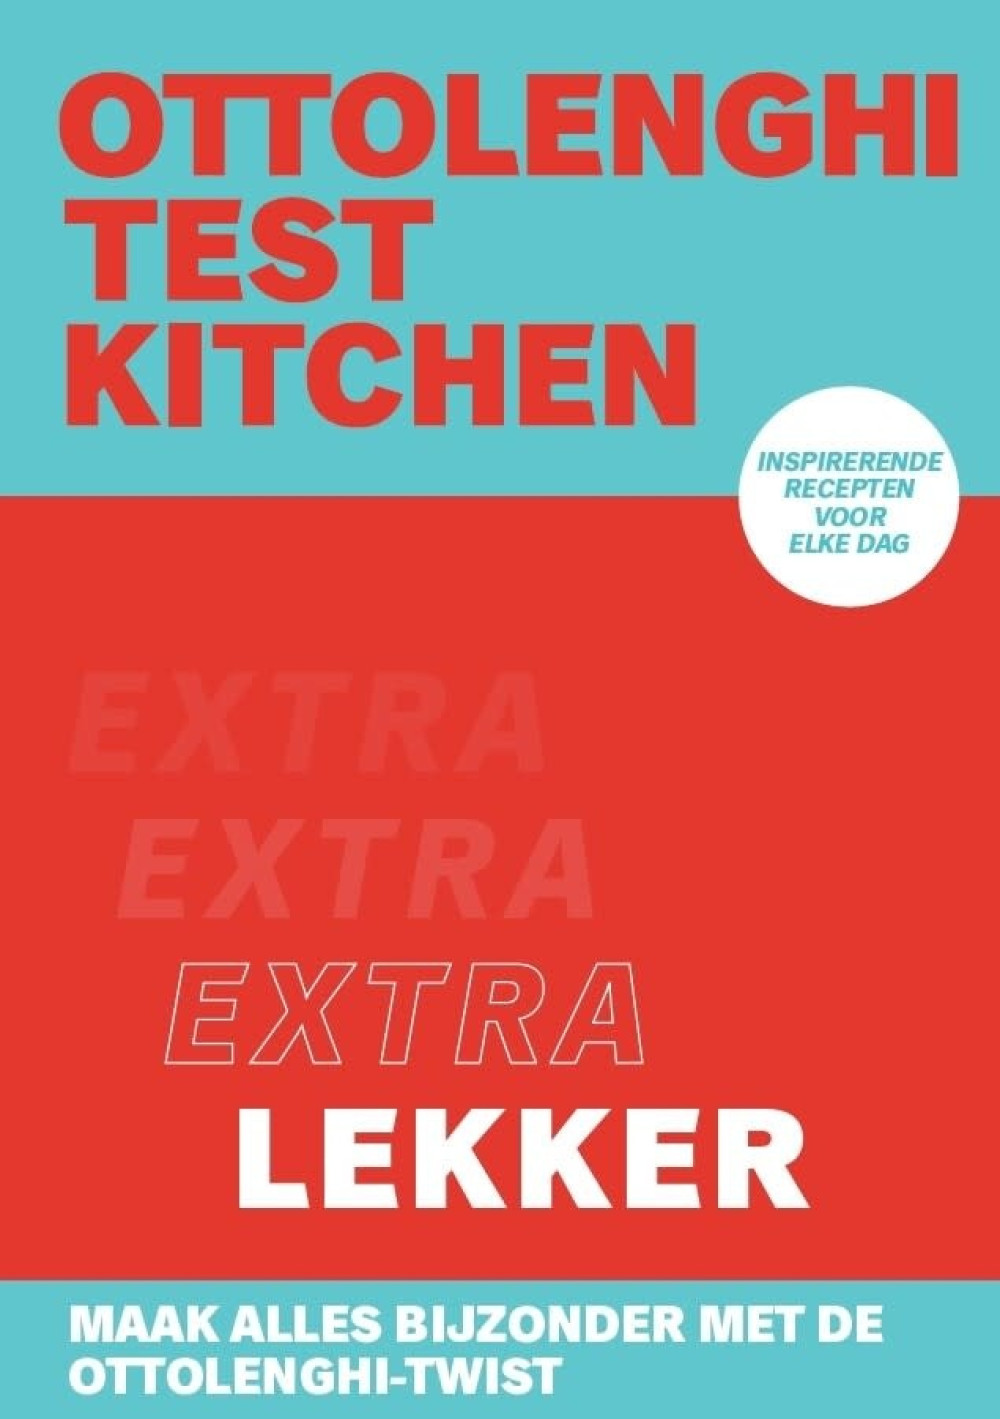 Ottolenghi Test Kitchen: extra lekker